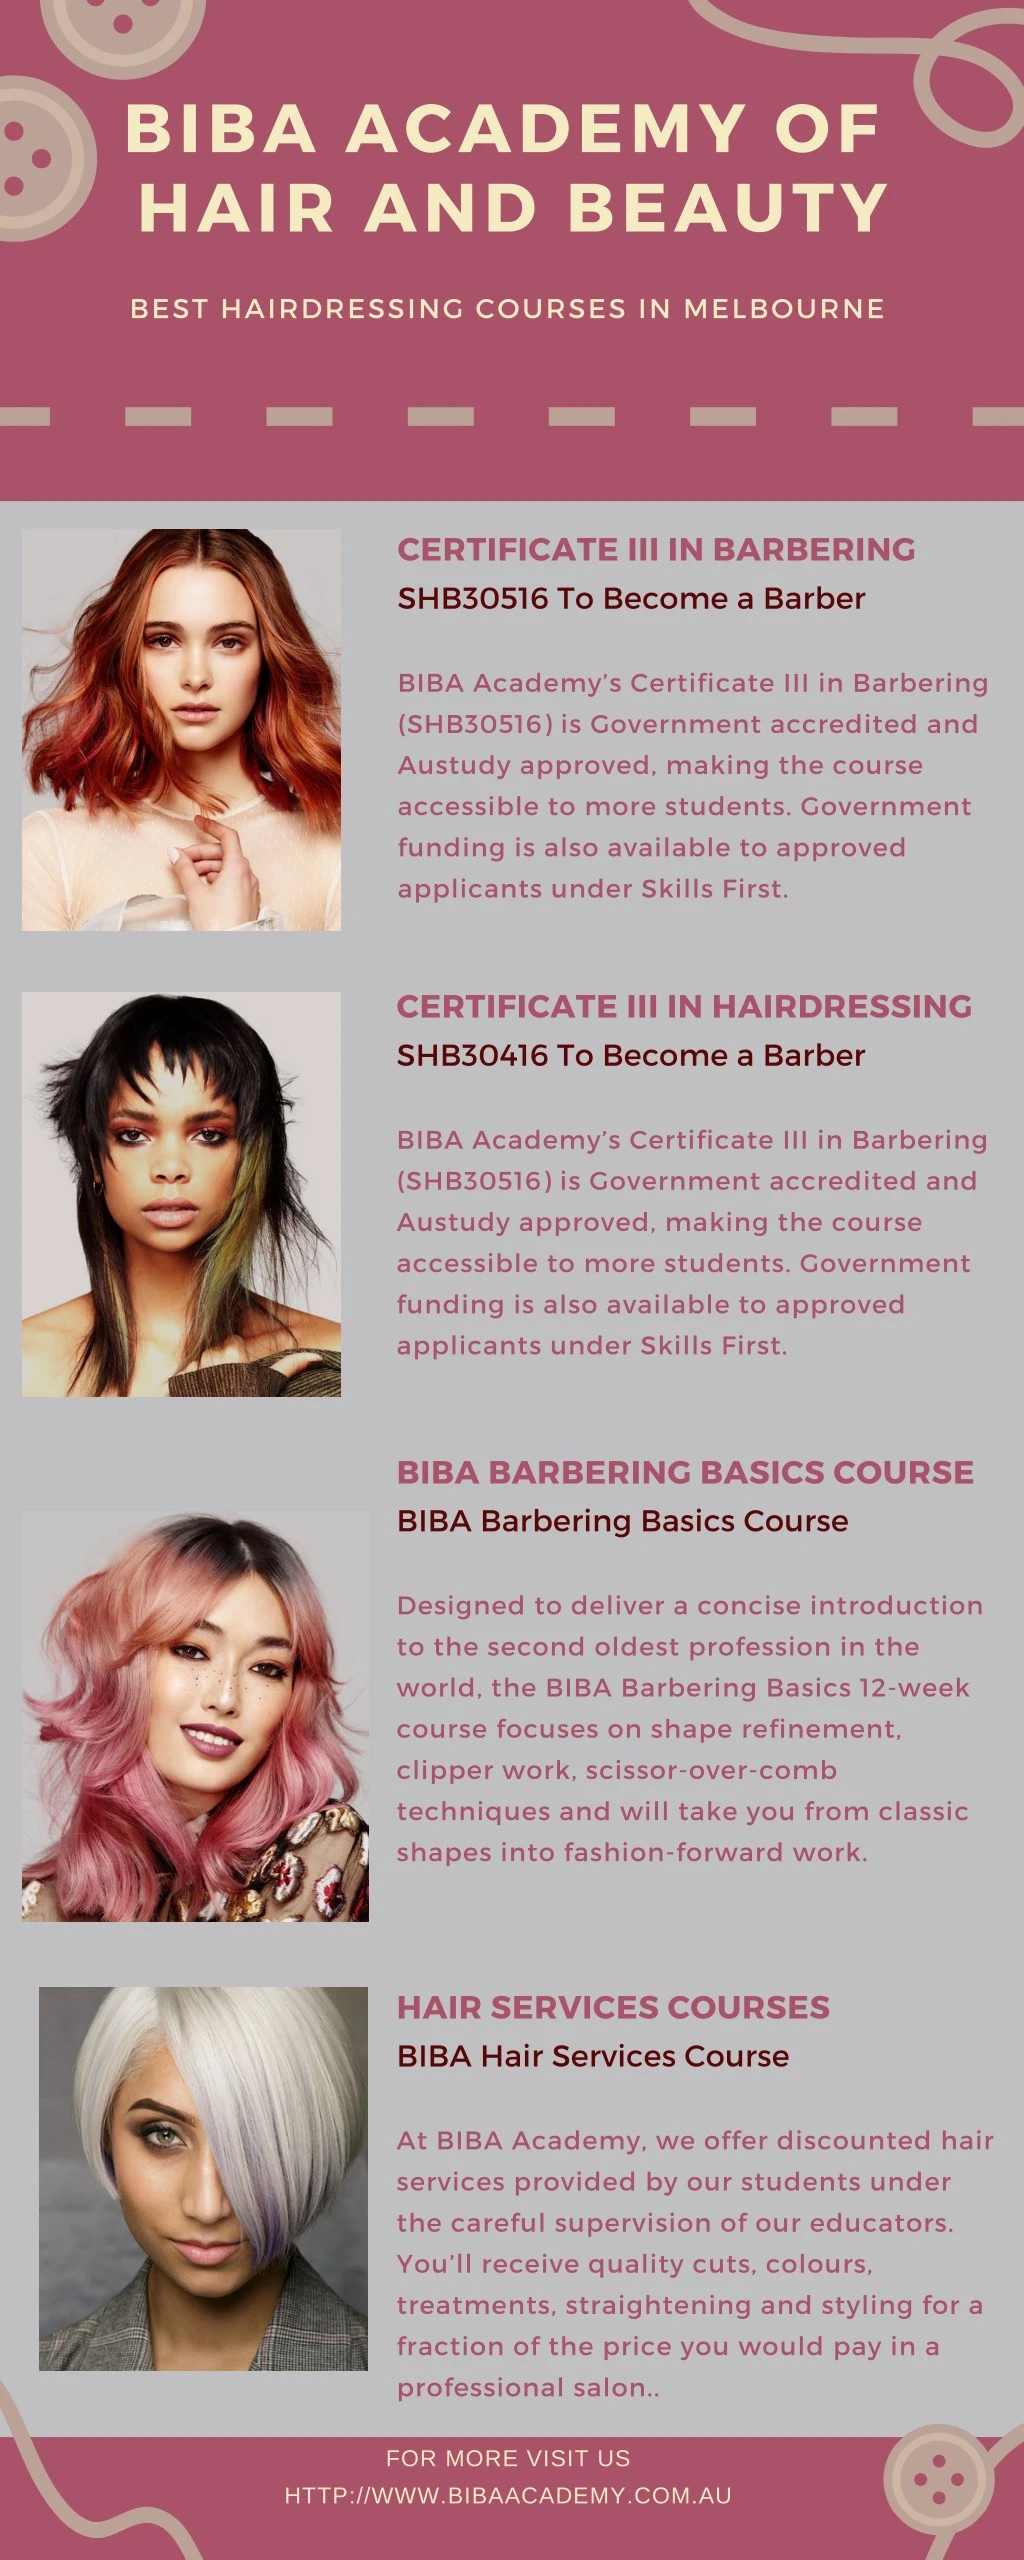 biba academy of hair and beauty